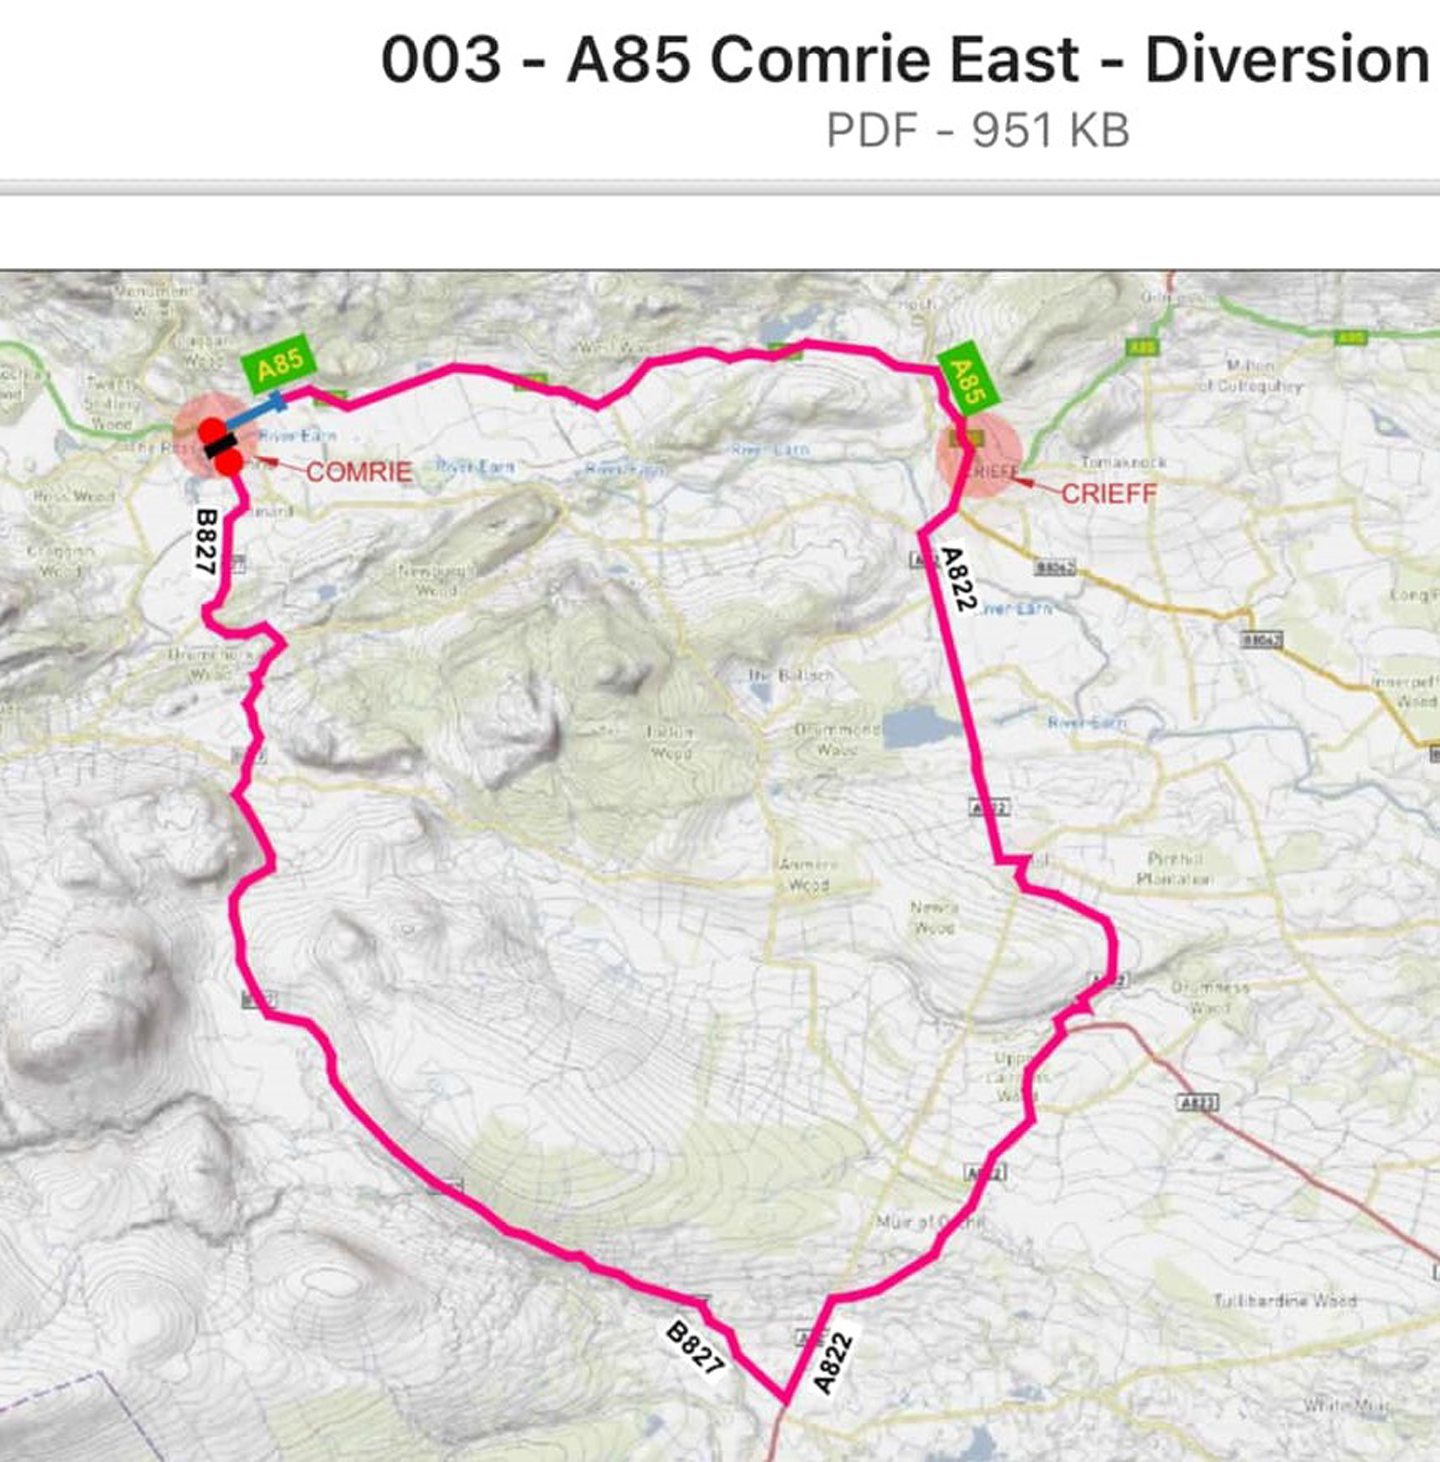 The 26-mile diversion route for Comrie via Crieff.